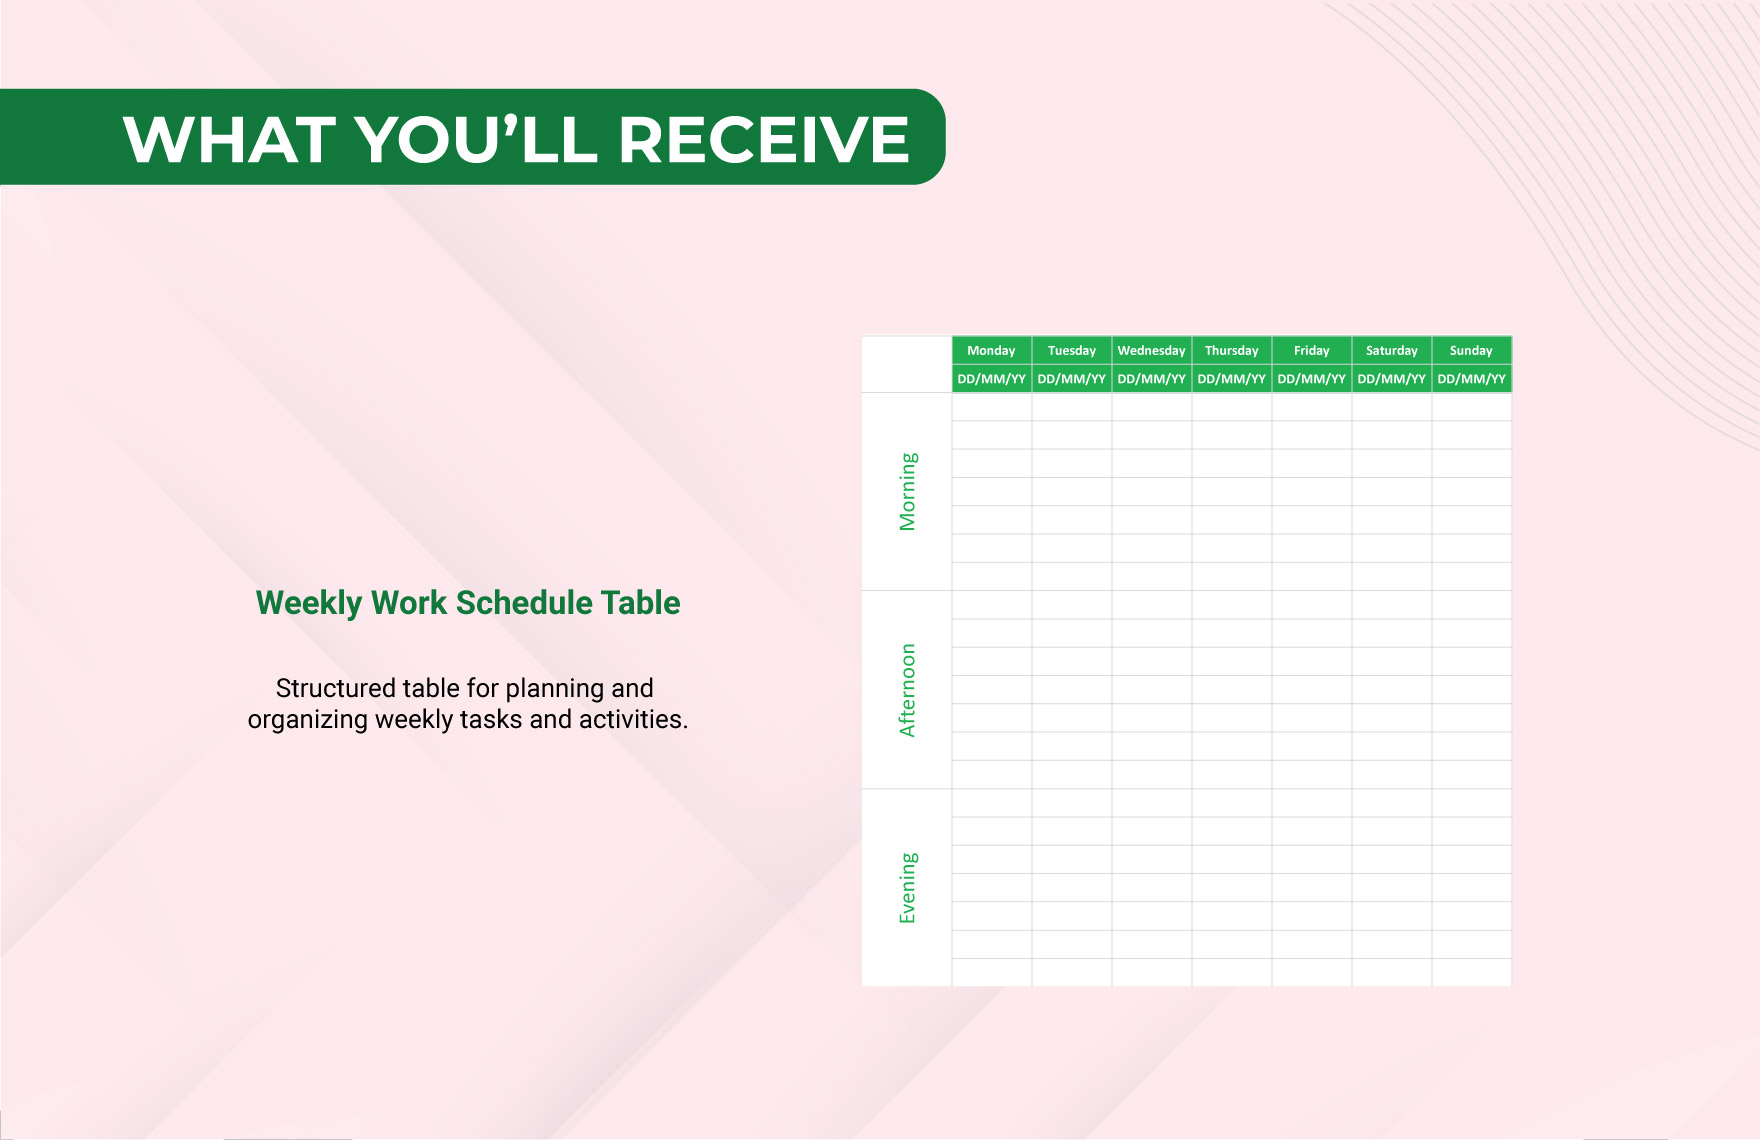 Weekly Work Schedule Template